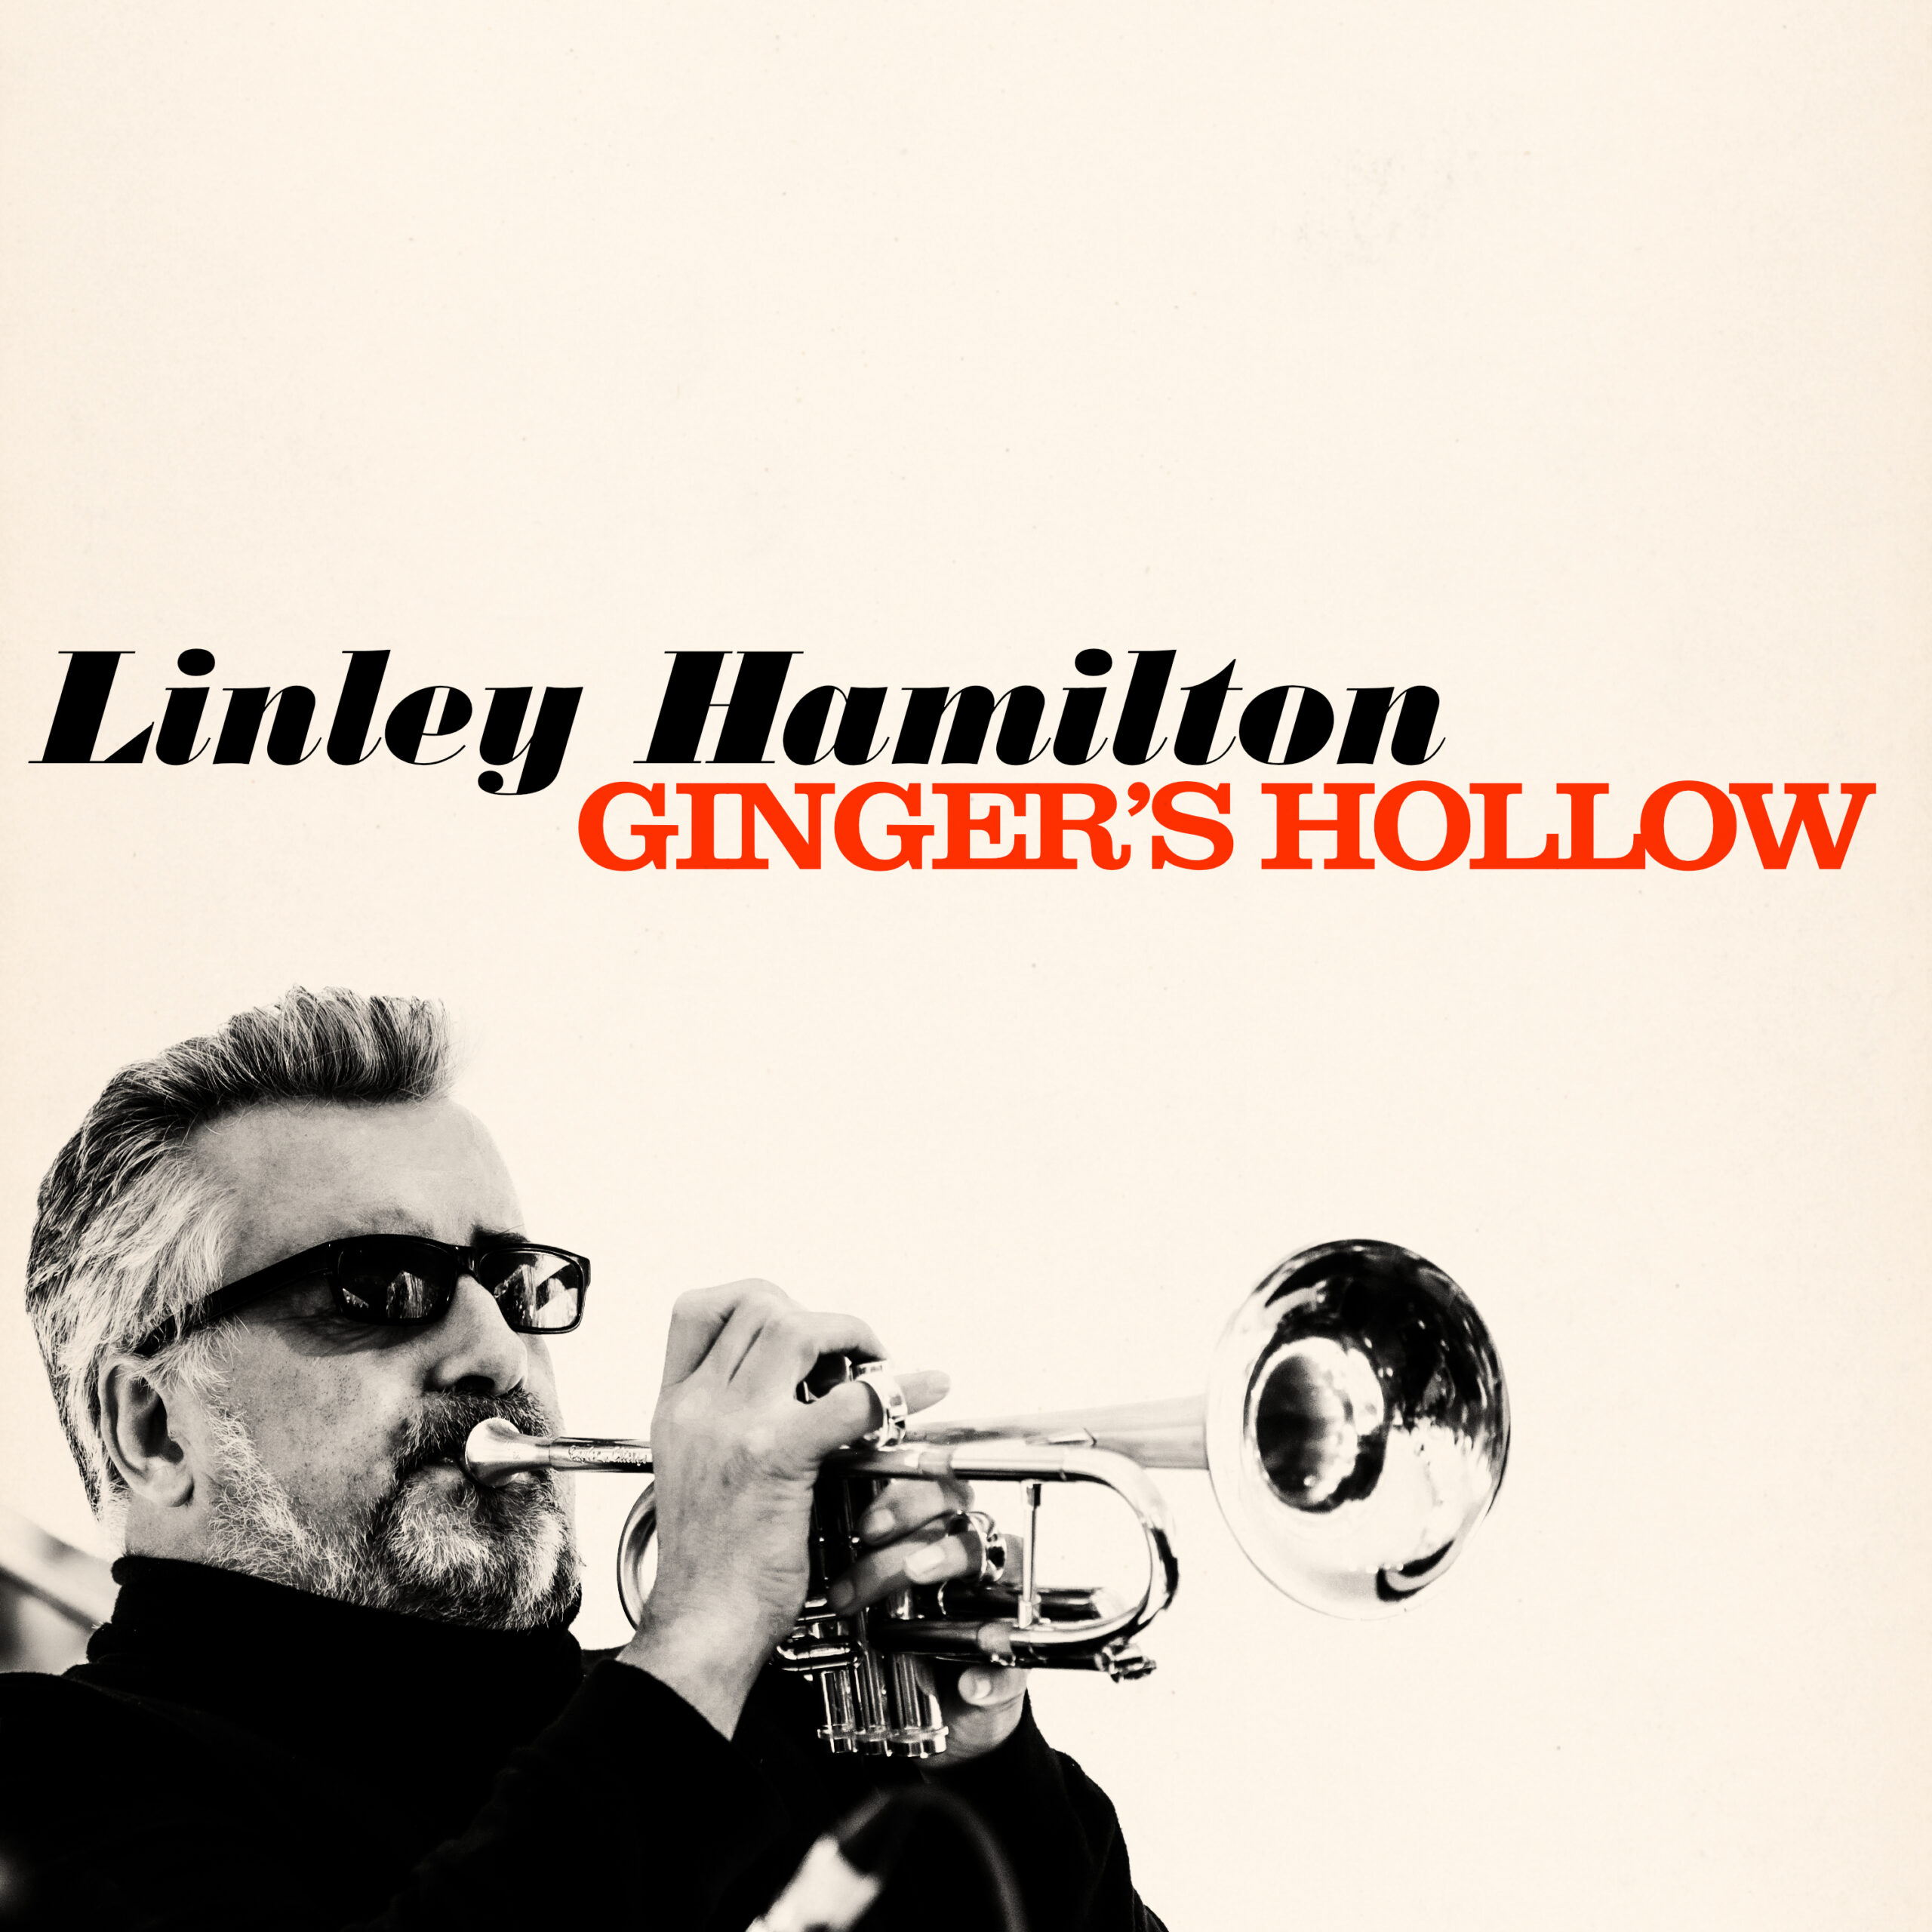 LINLEY HAMILTON - Ginger’s Hollow cover 